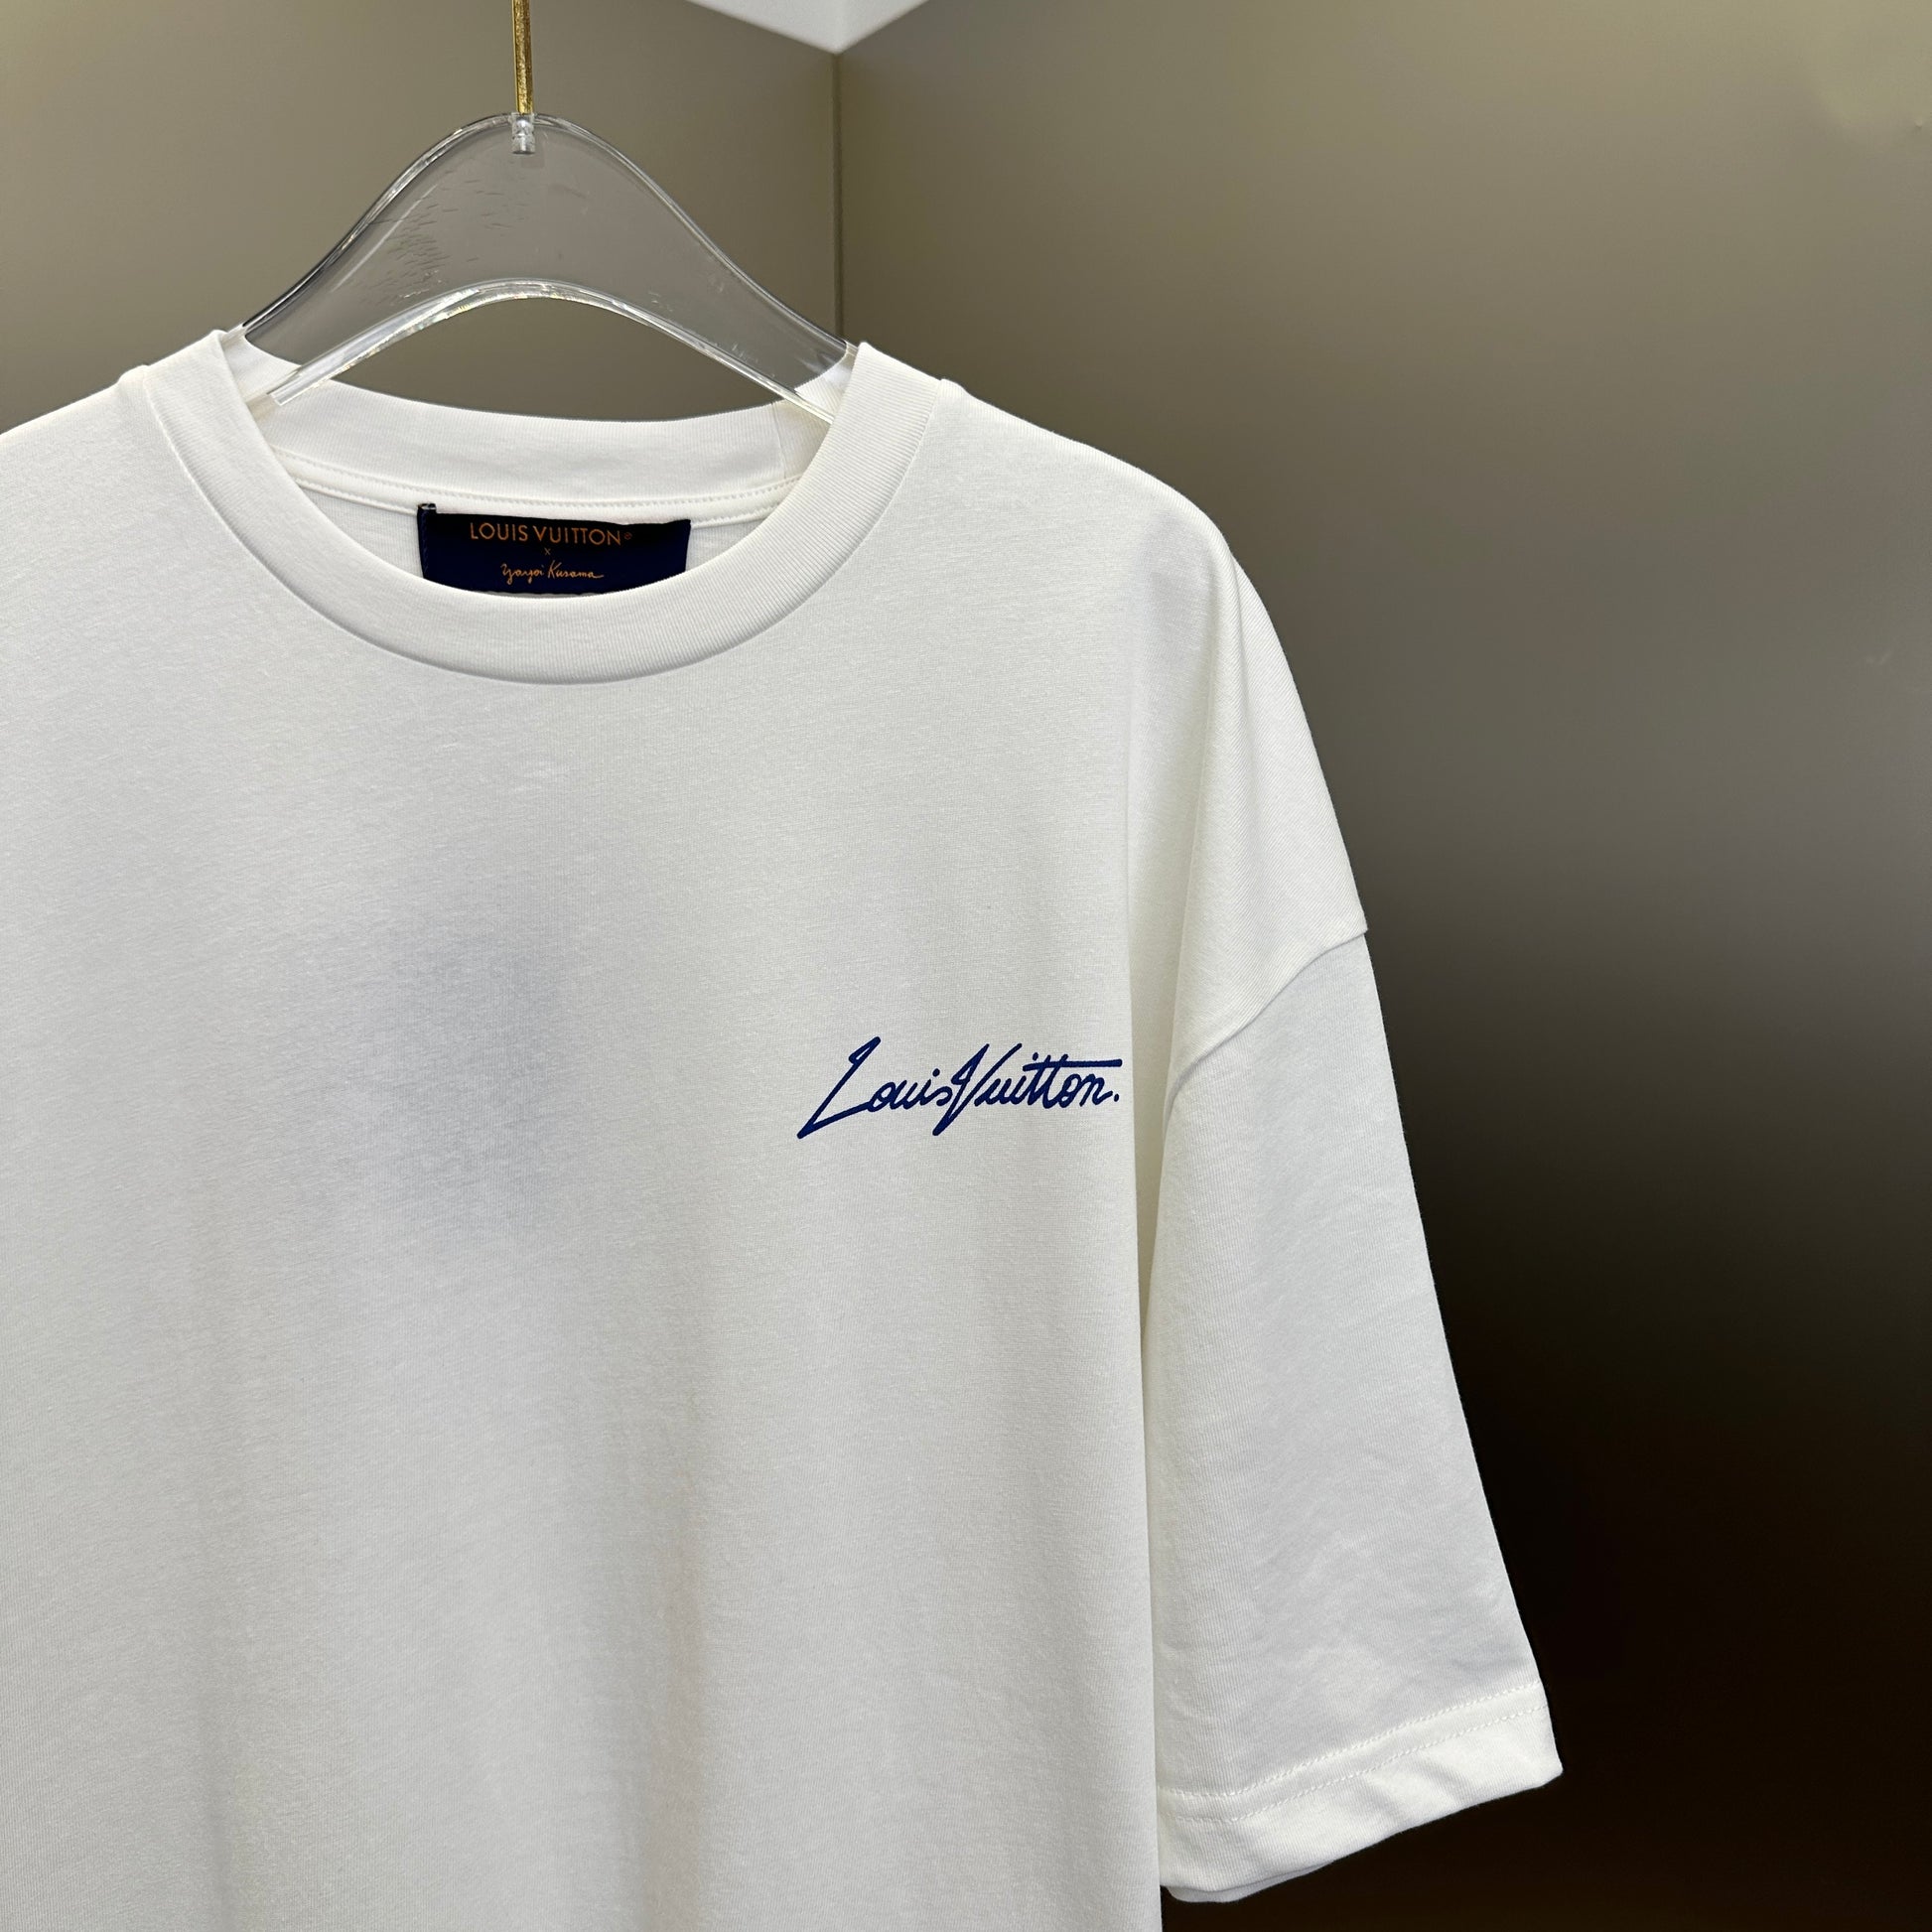 LV Pumpkins Printed Men White T-Shirt 23.90